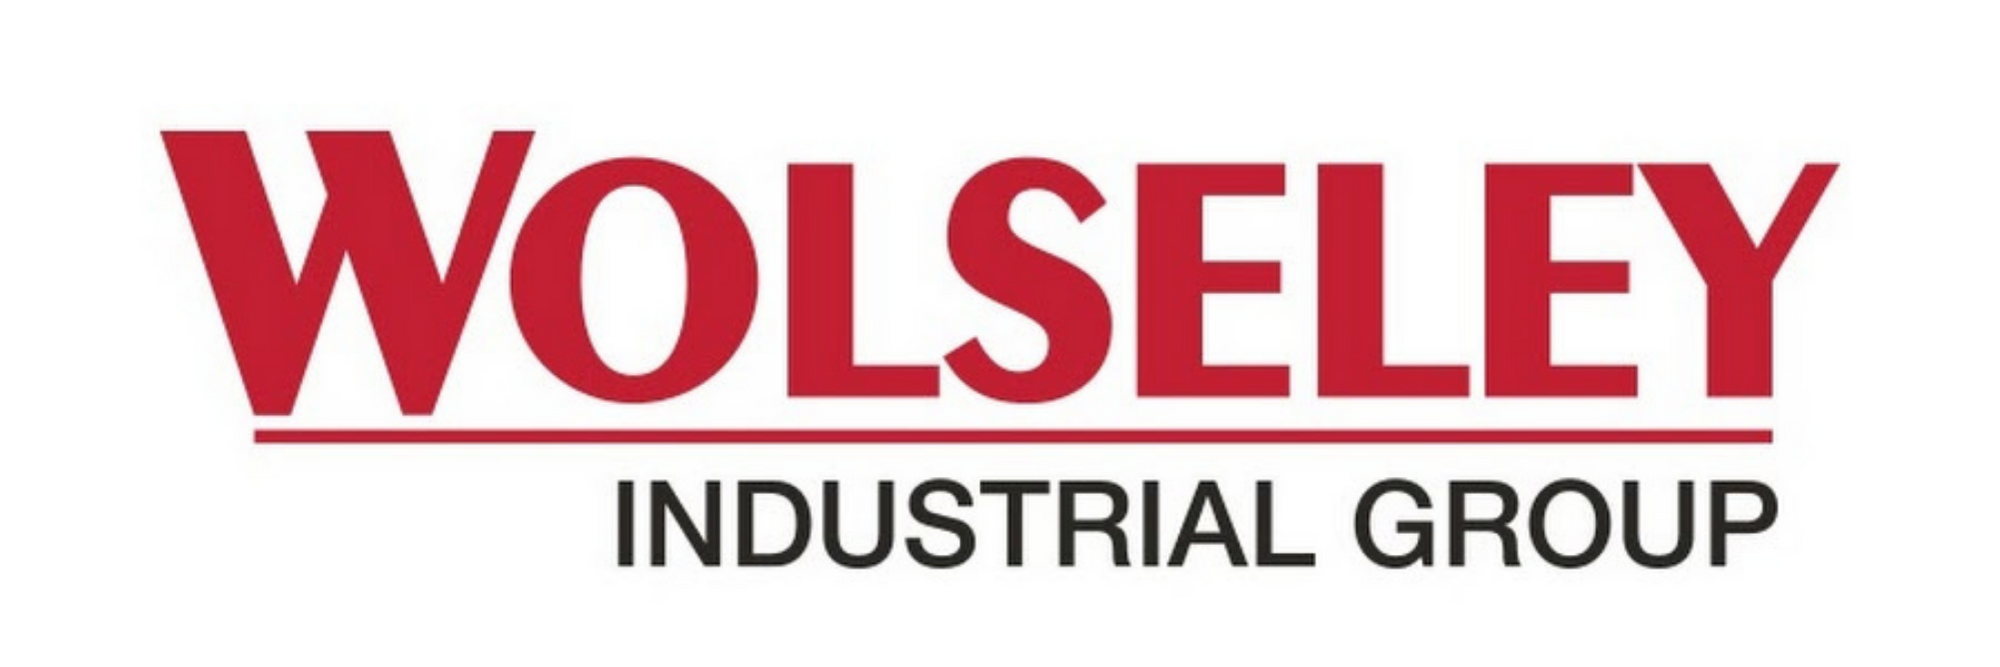 Wolseley Industrial Group